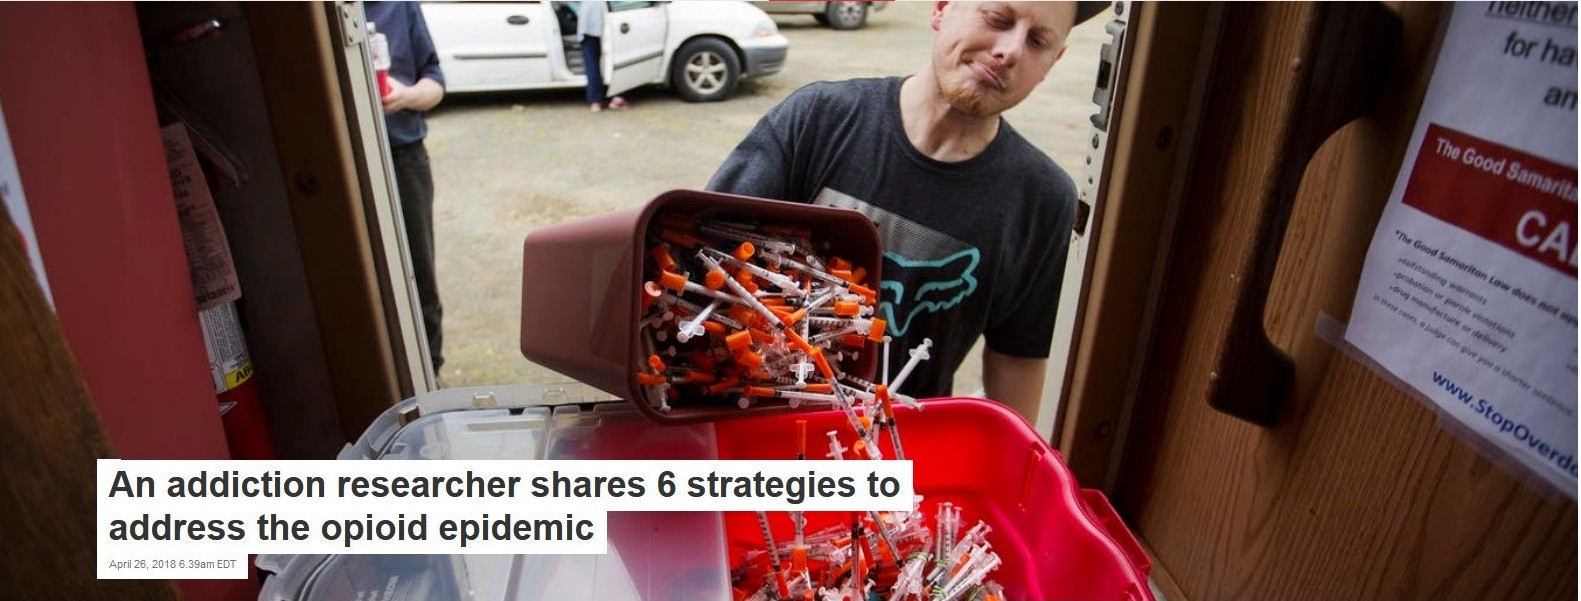 Stock photo of man disposing of needles